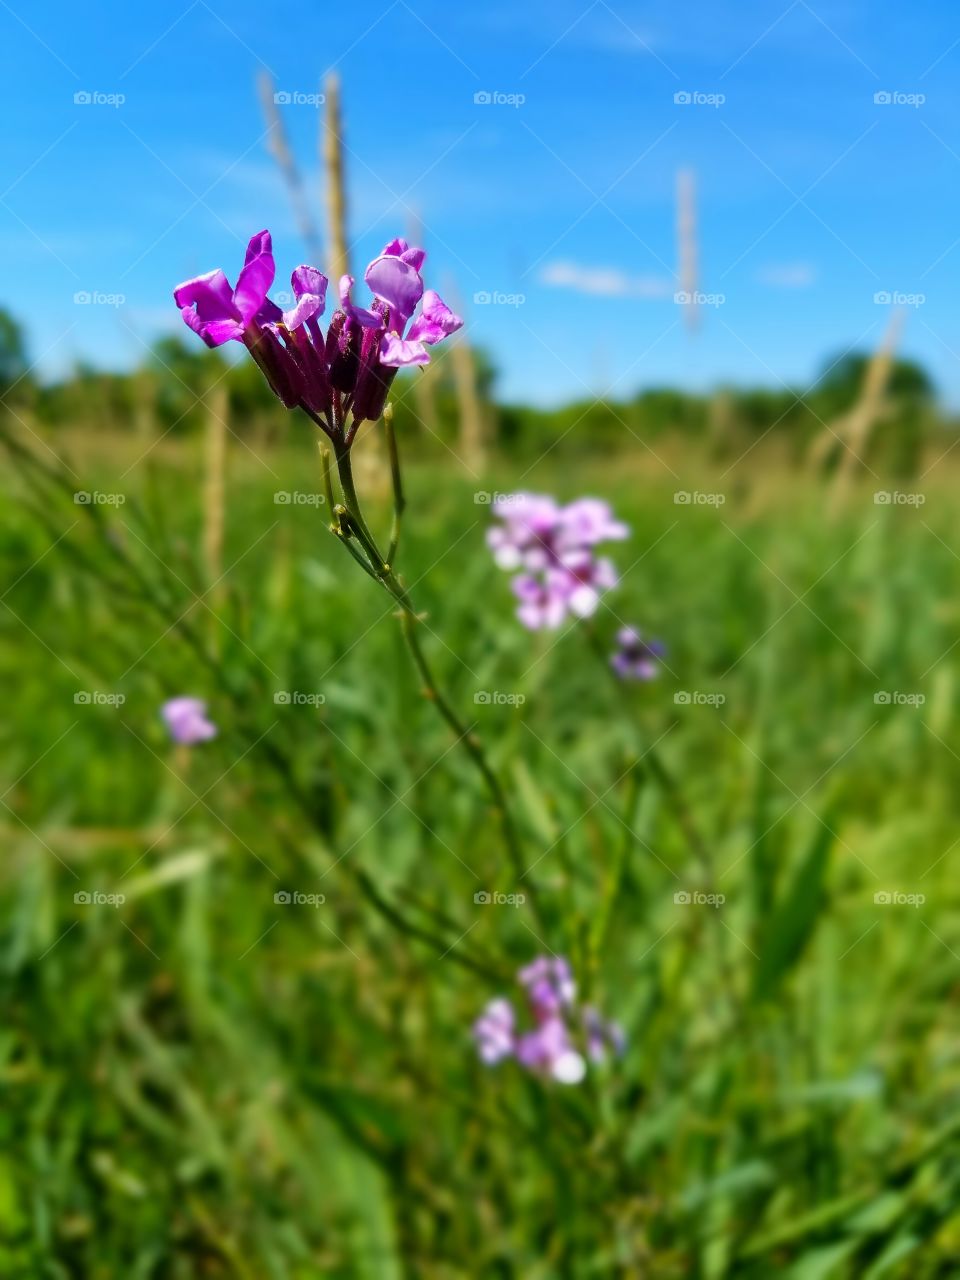 Flower, Nature, Field, Hayfield, Grass